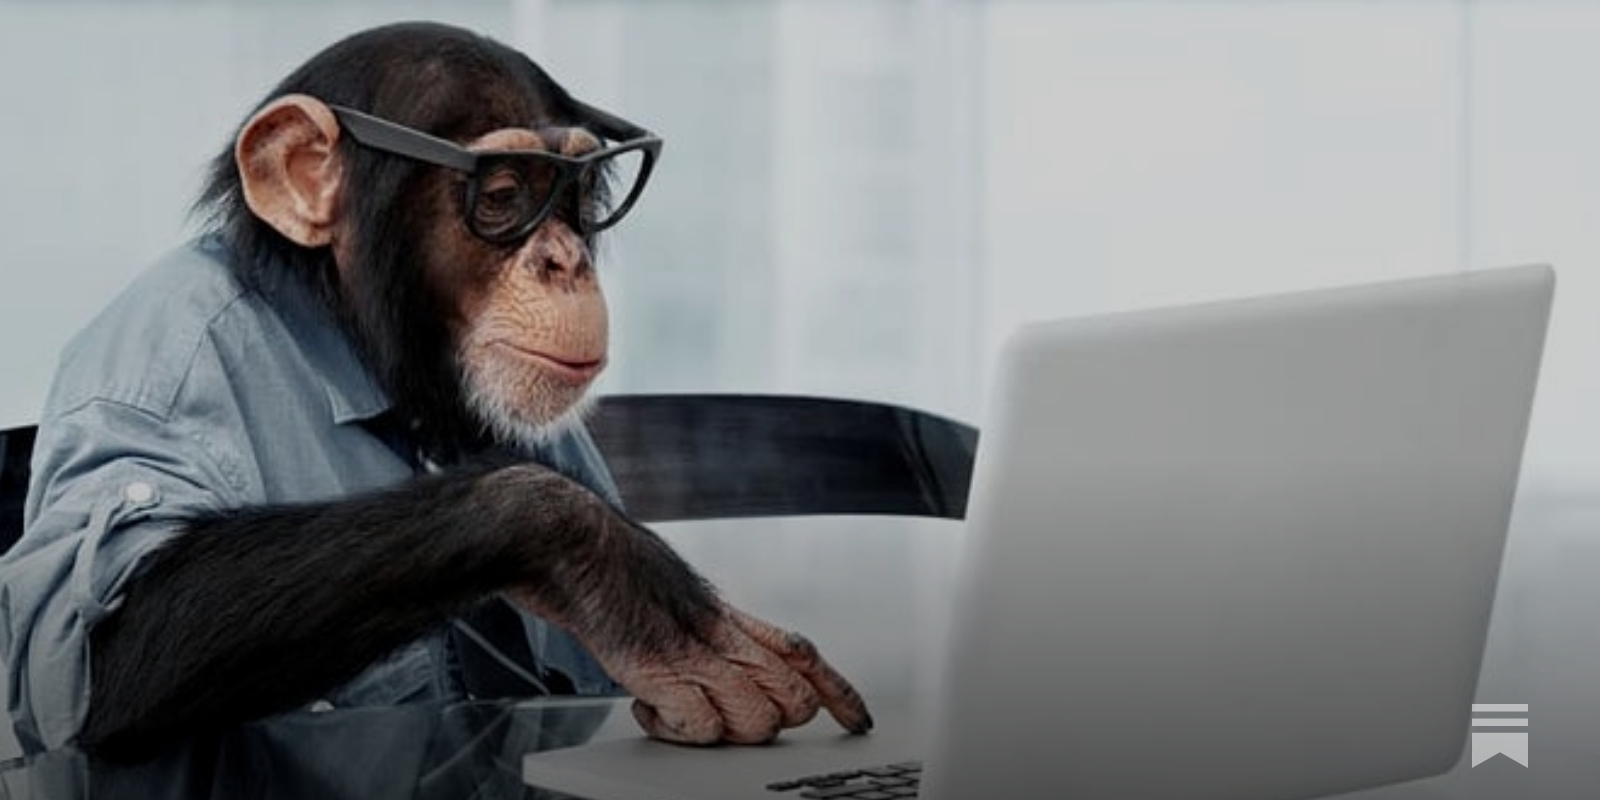 The monkeys that beat the market - Market Sentiment